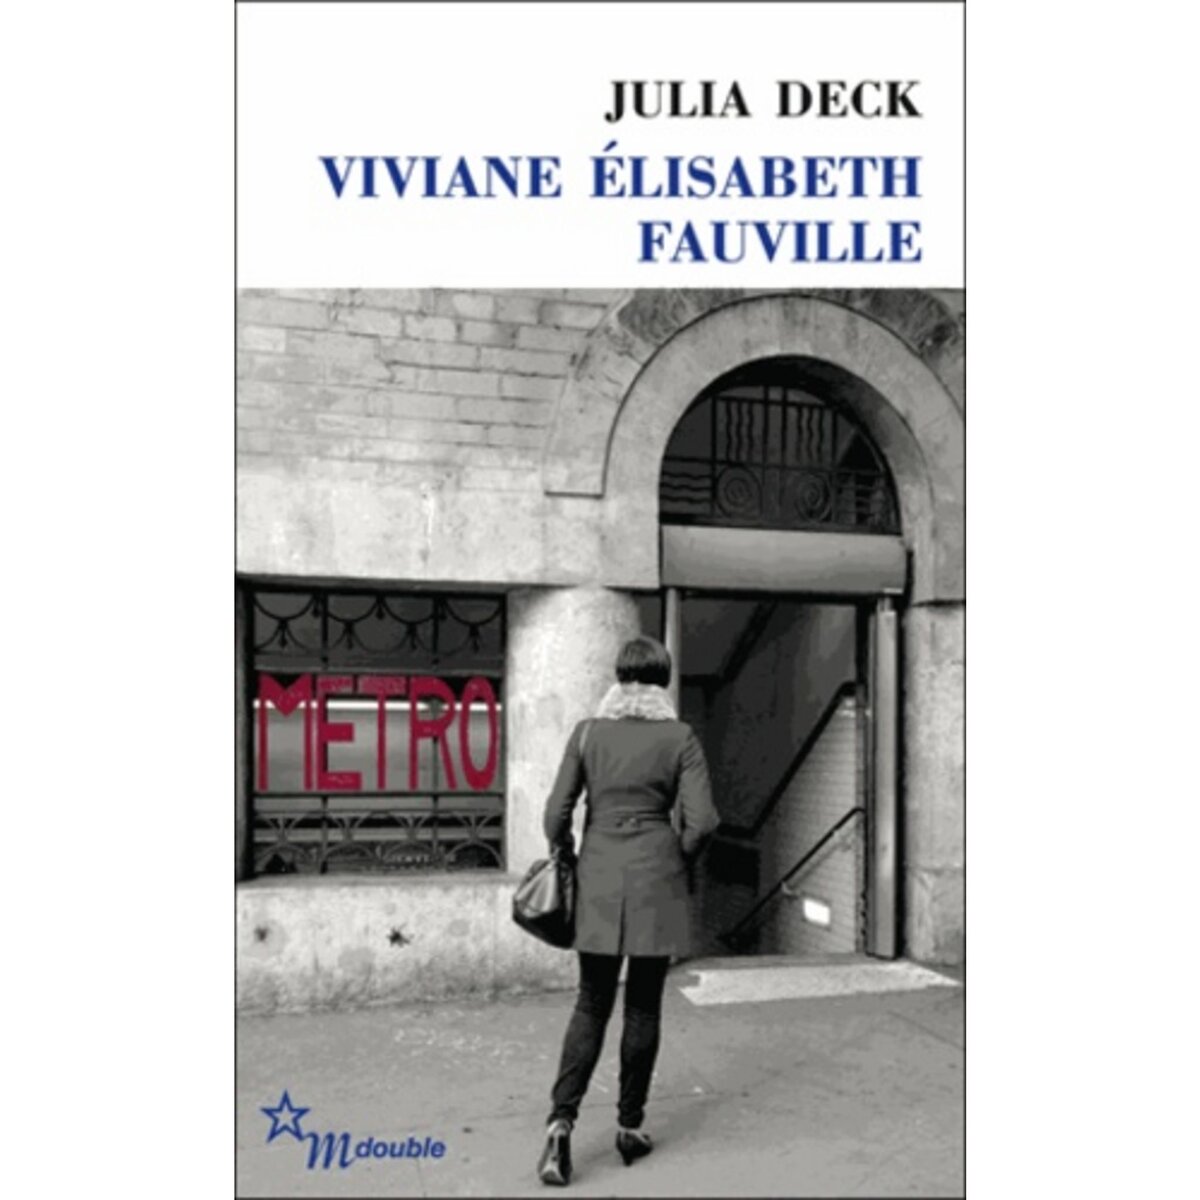  VIVIANE ELISABETH FAUVILLE, Deck Julia